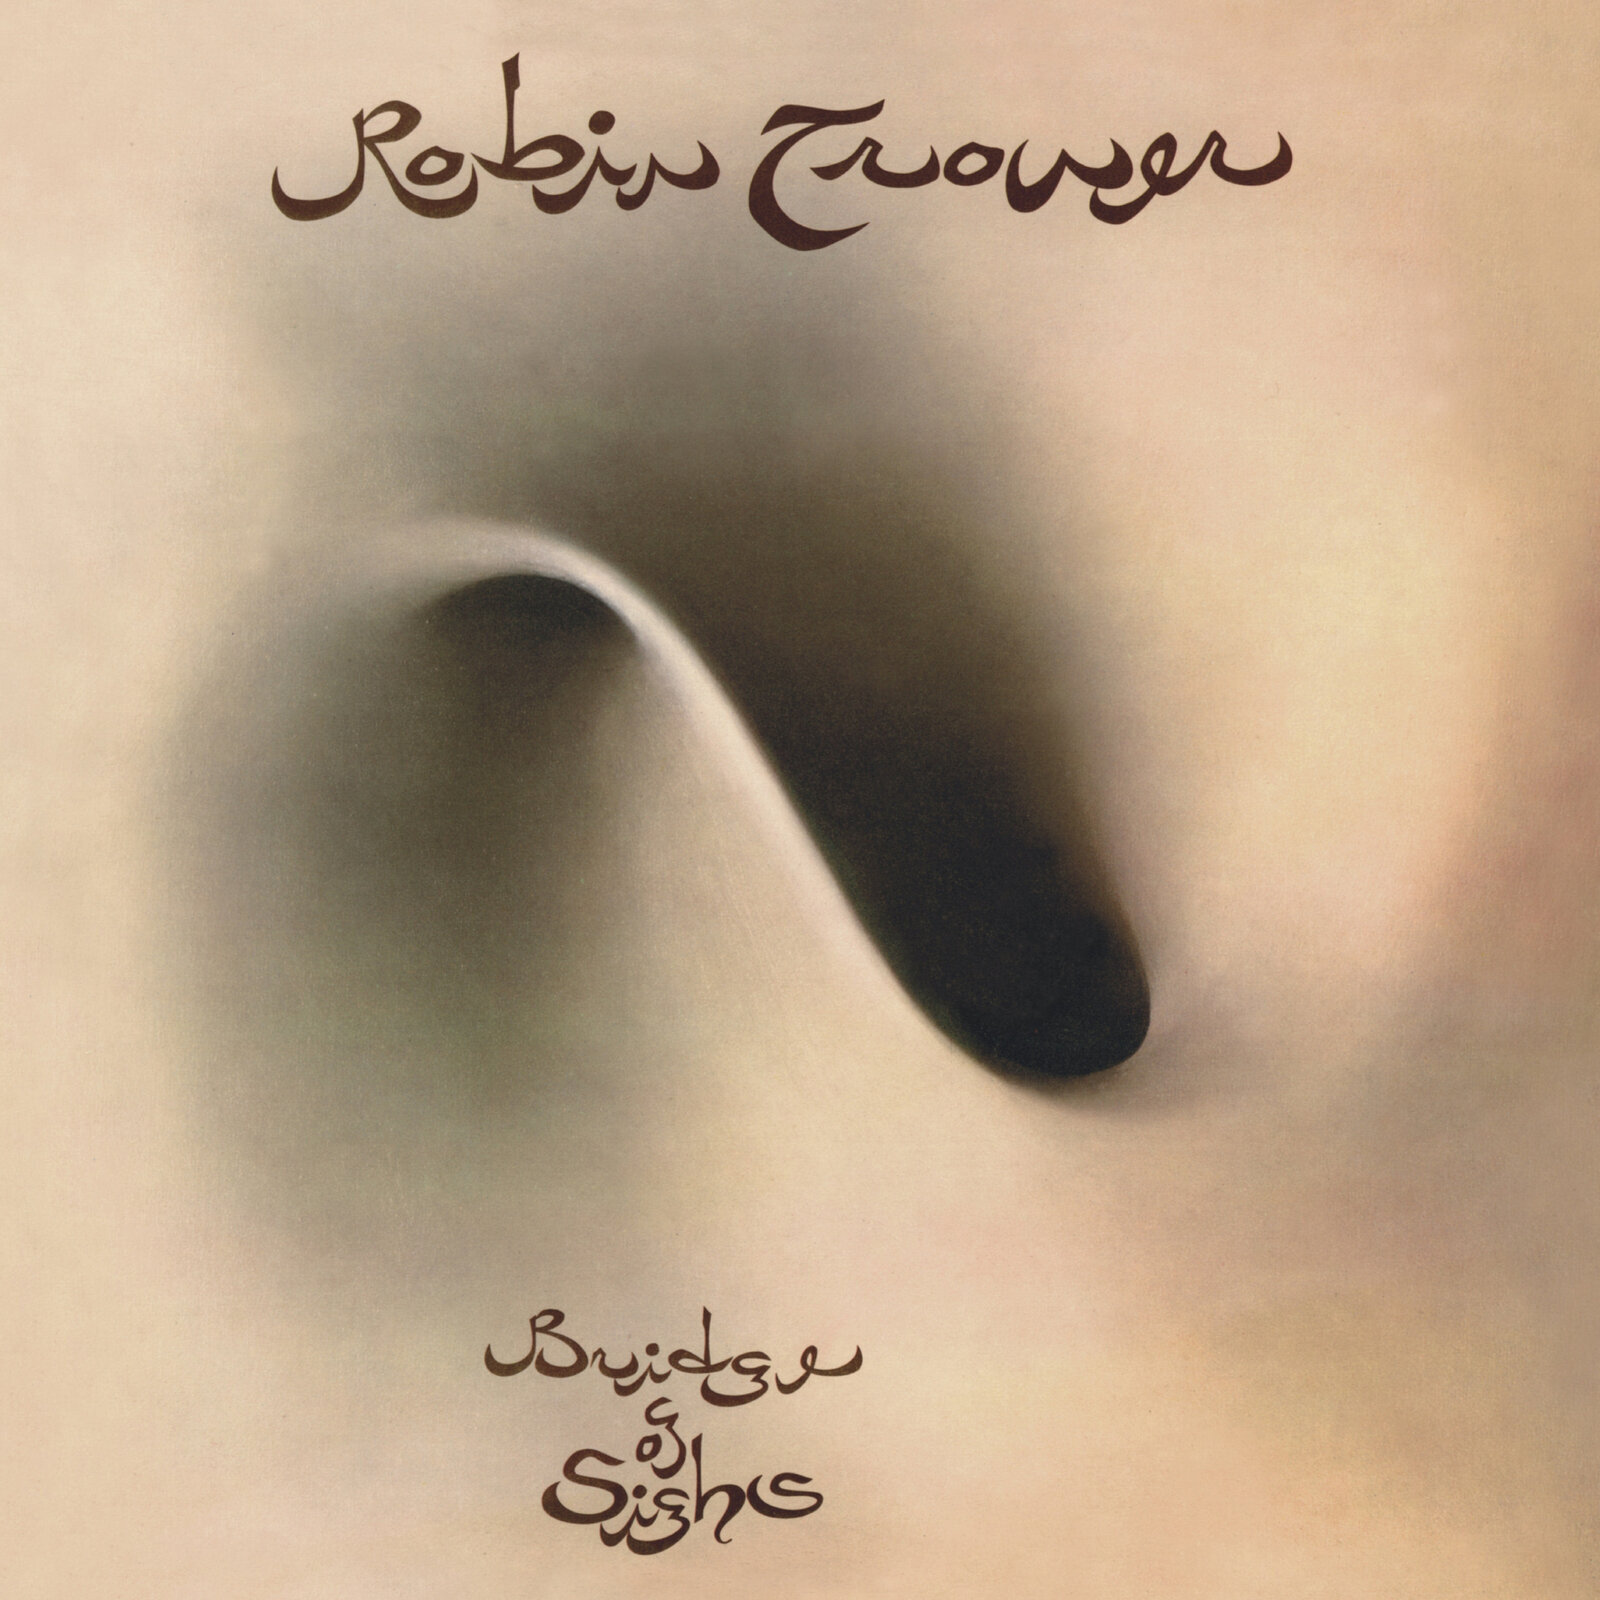 Vinylplade Robin Trower - Bridge of Sighs (50th Anniversary Edition) (High Quality) (2 LP)